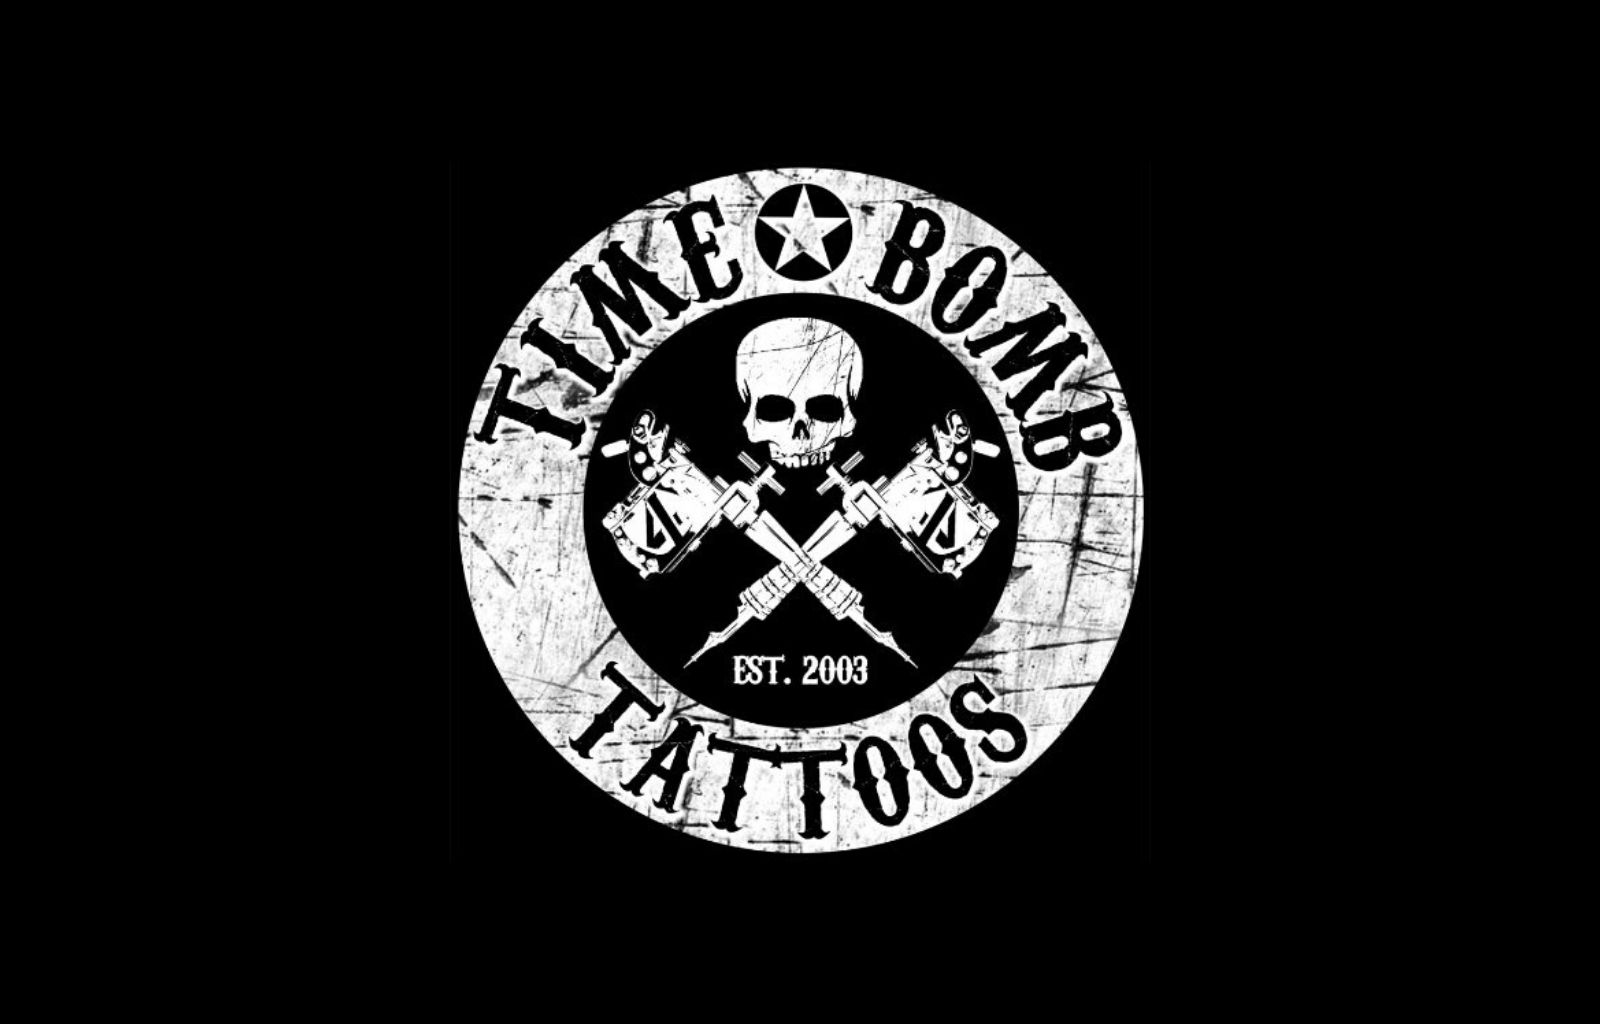 Timebomb Tattoos Surrey Croydon